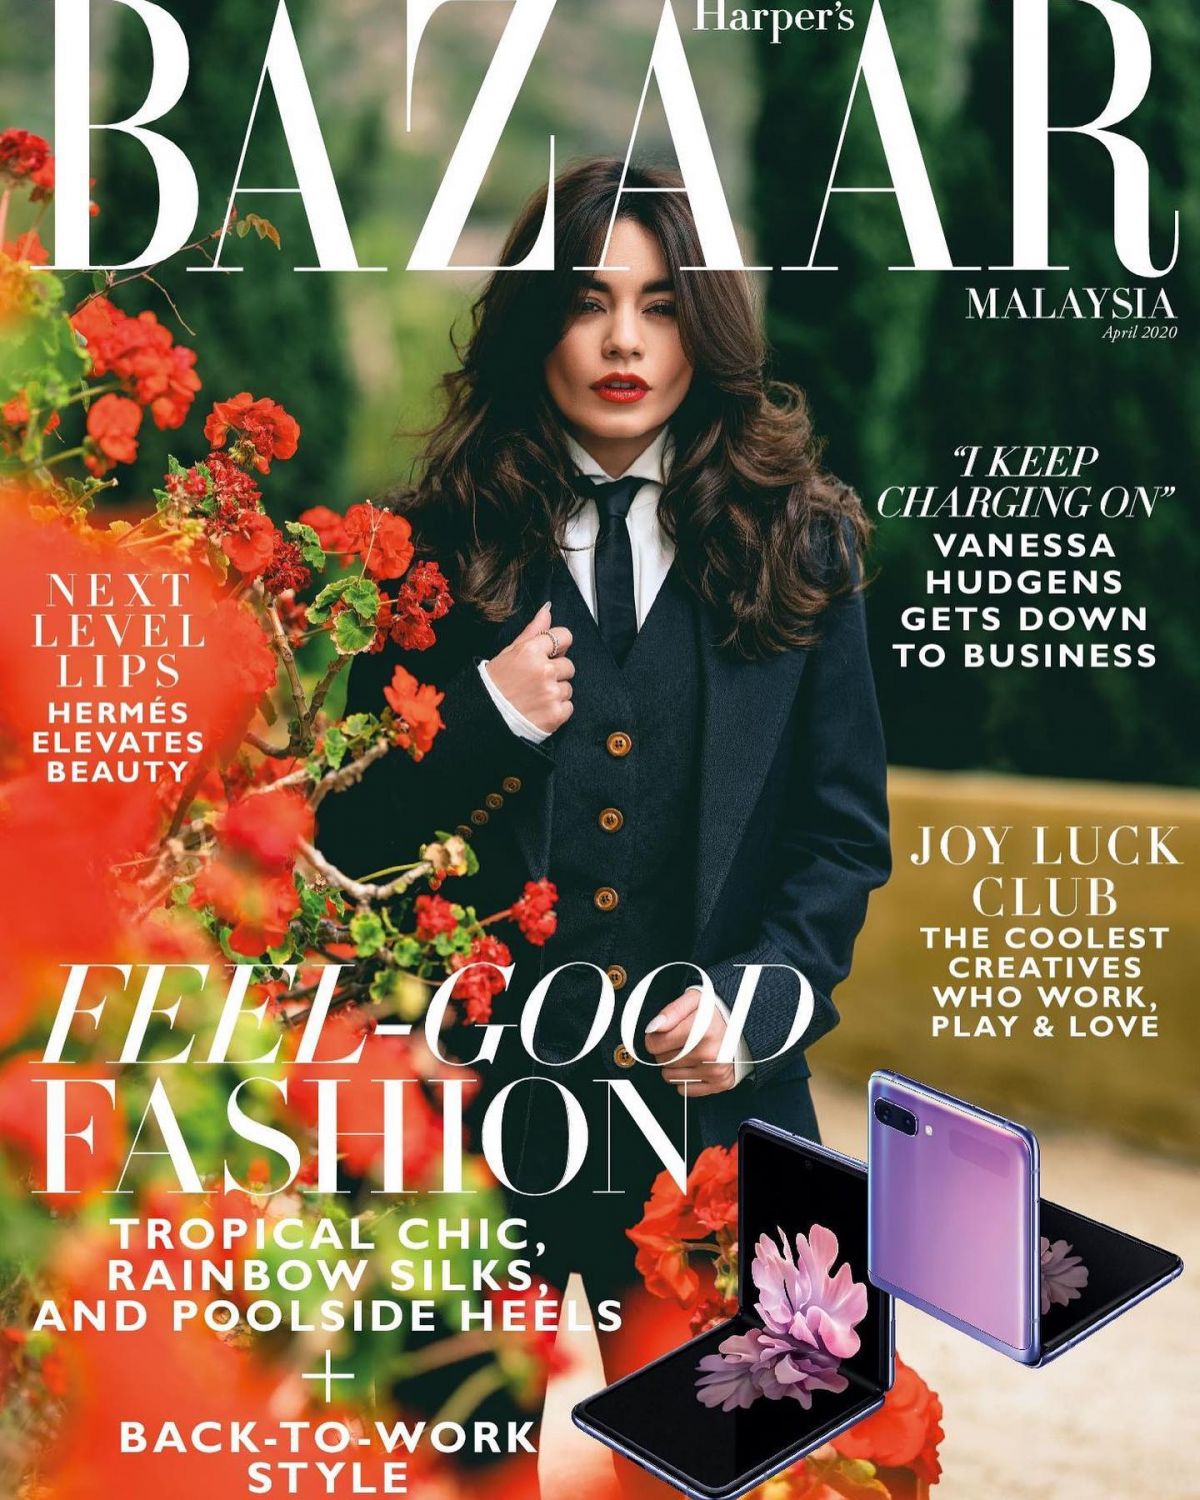 Vanessa Hudgens Vanessa-hudgens-in-harper-s-bazaar-magazine-malaysia-april-2020-3